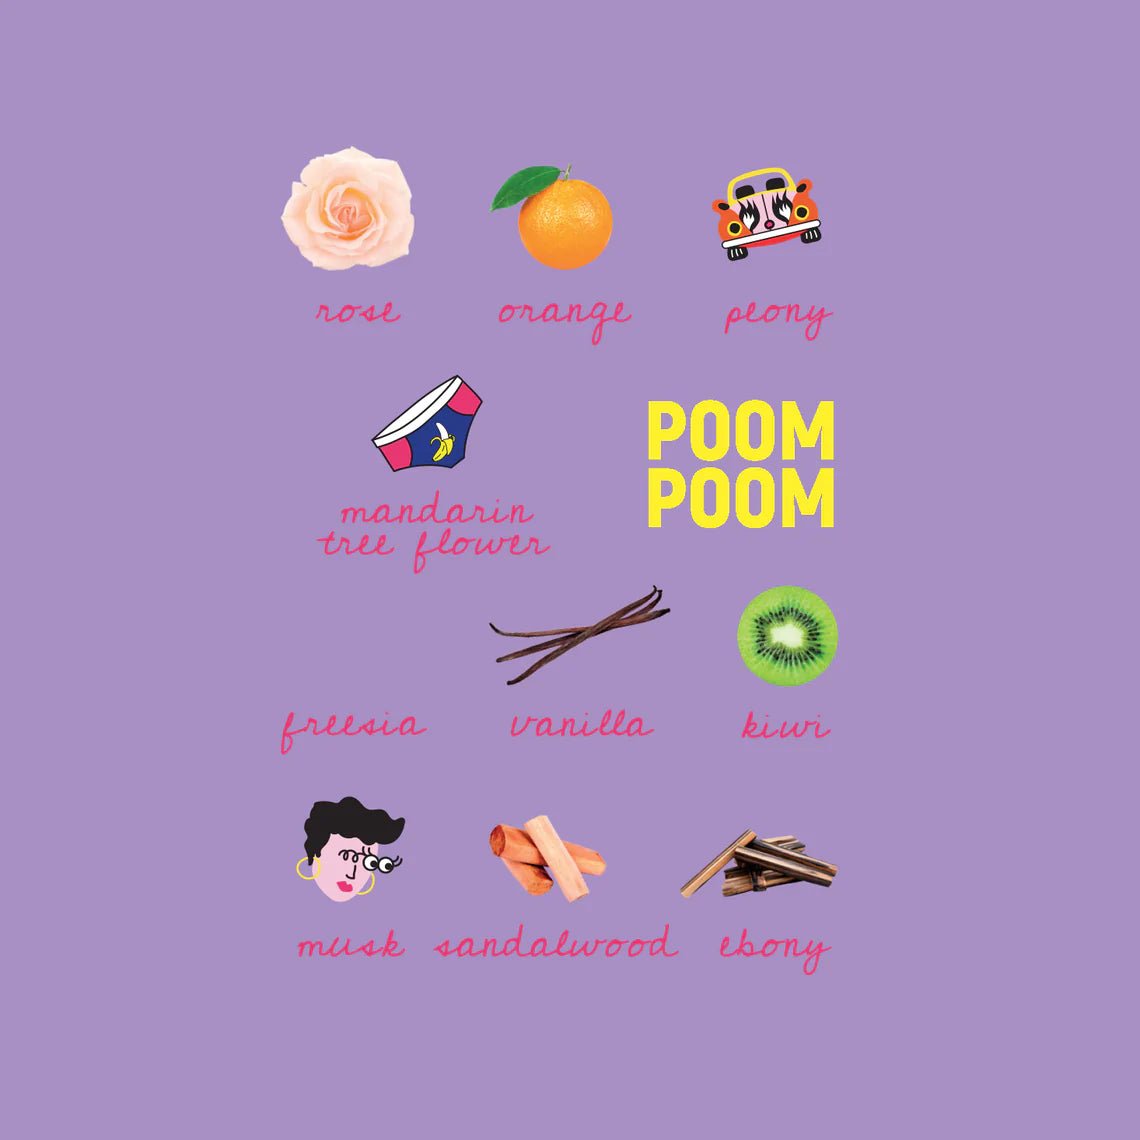 Maison Matine Poom Poom Eau de Parfum - 50ml - The Sensory